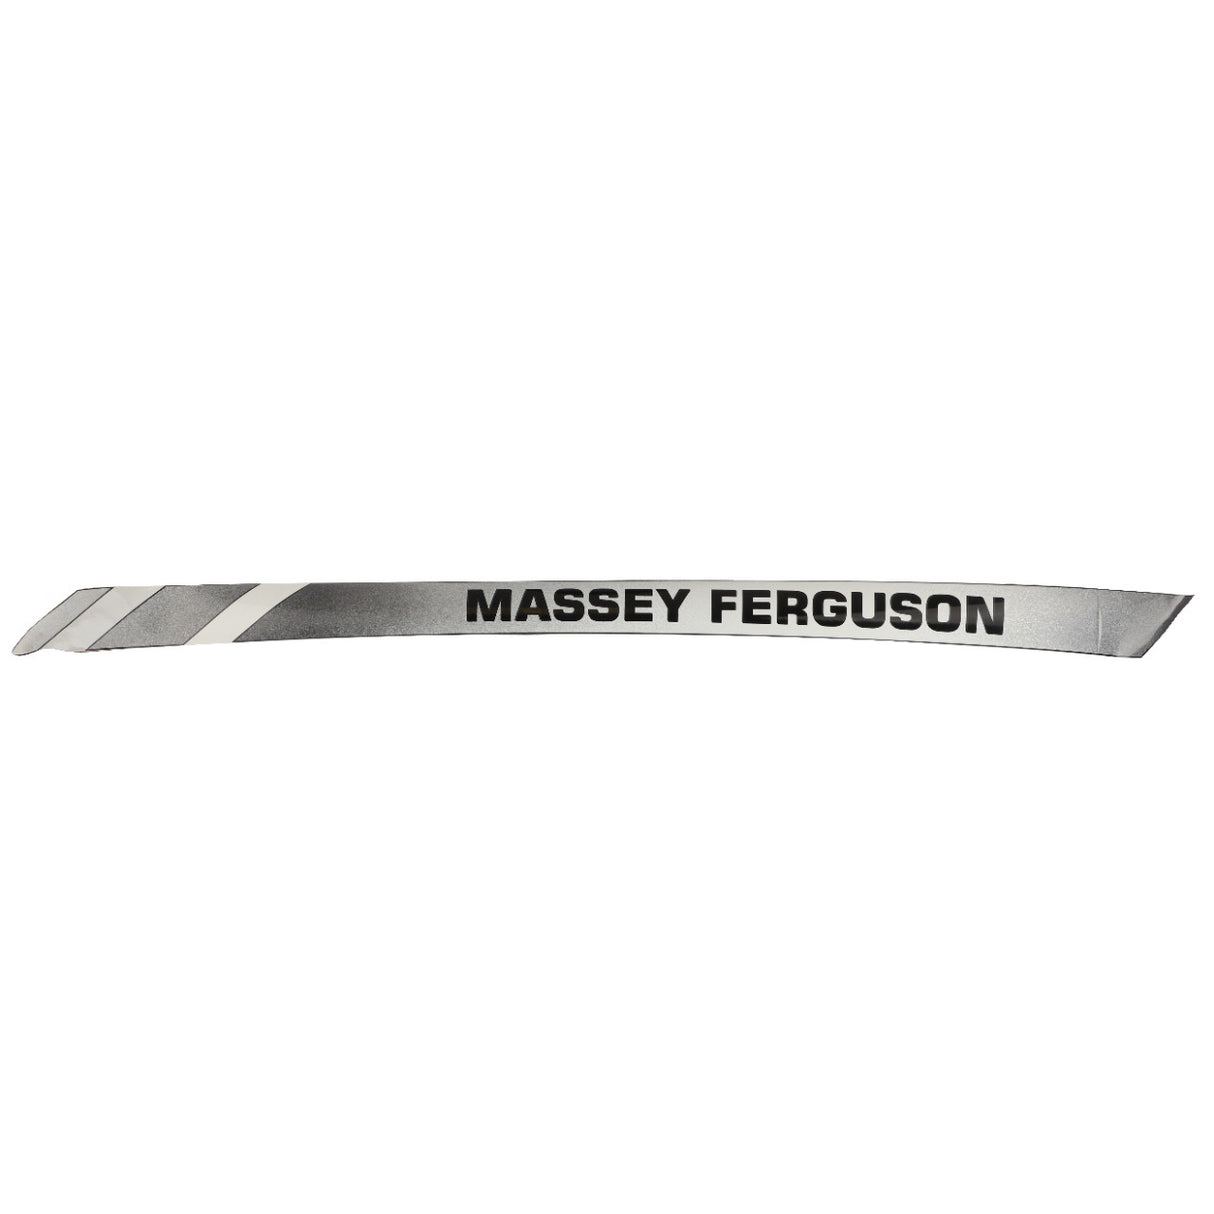 AGCO | Massey Ferguson Decal - Acp0298530 - Farming Parts